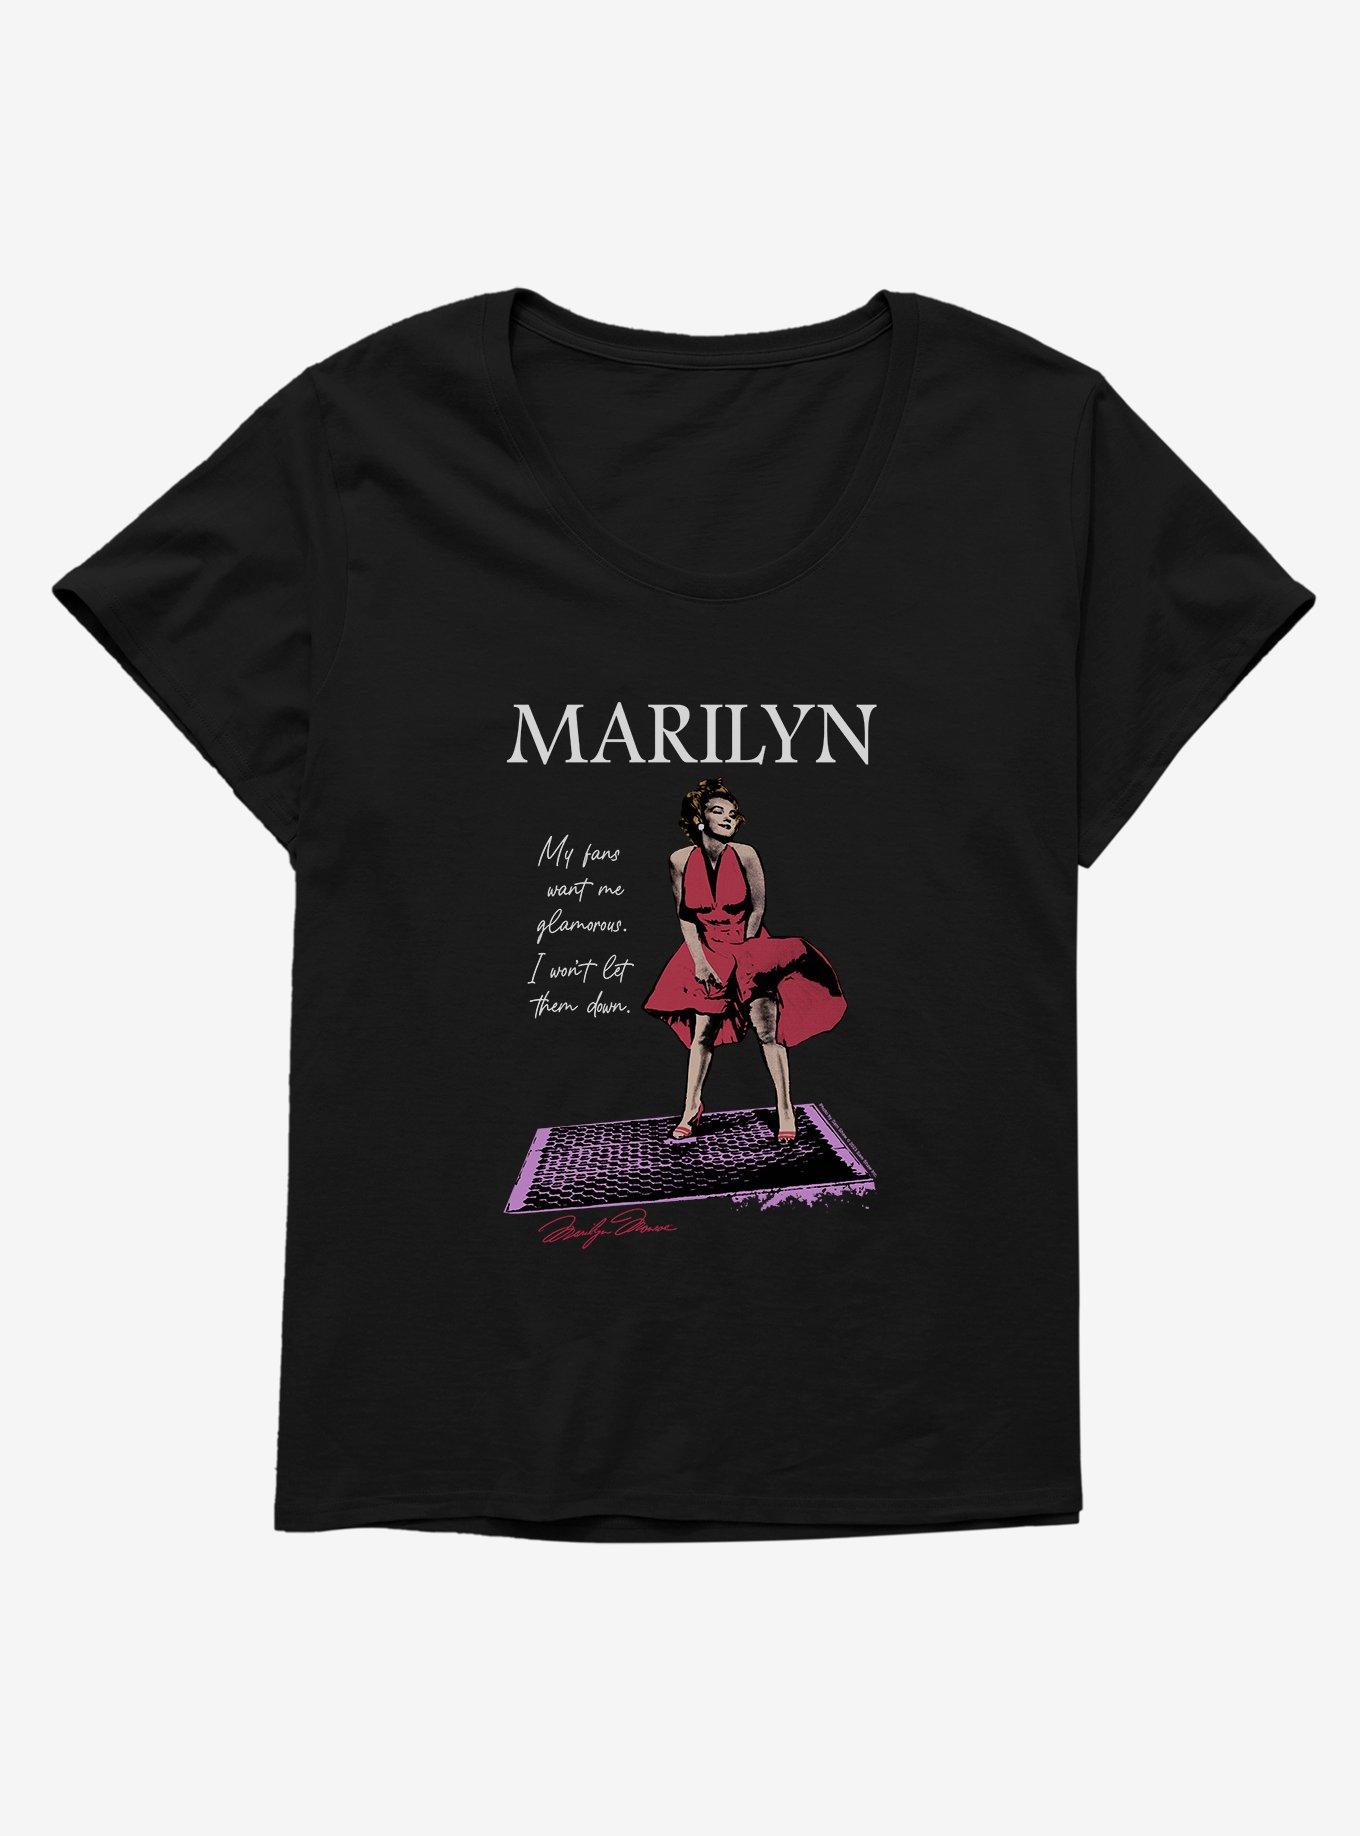 Marilyn Monroe Glamorous Red Dress Girls T-Shirt Plus